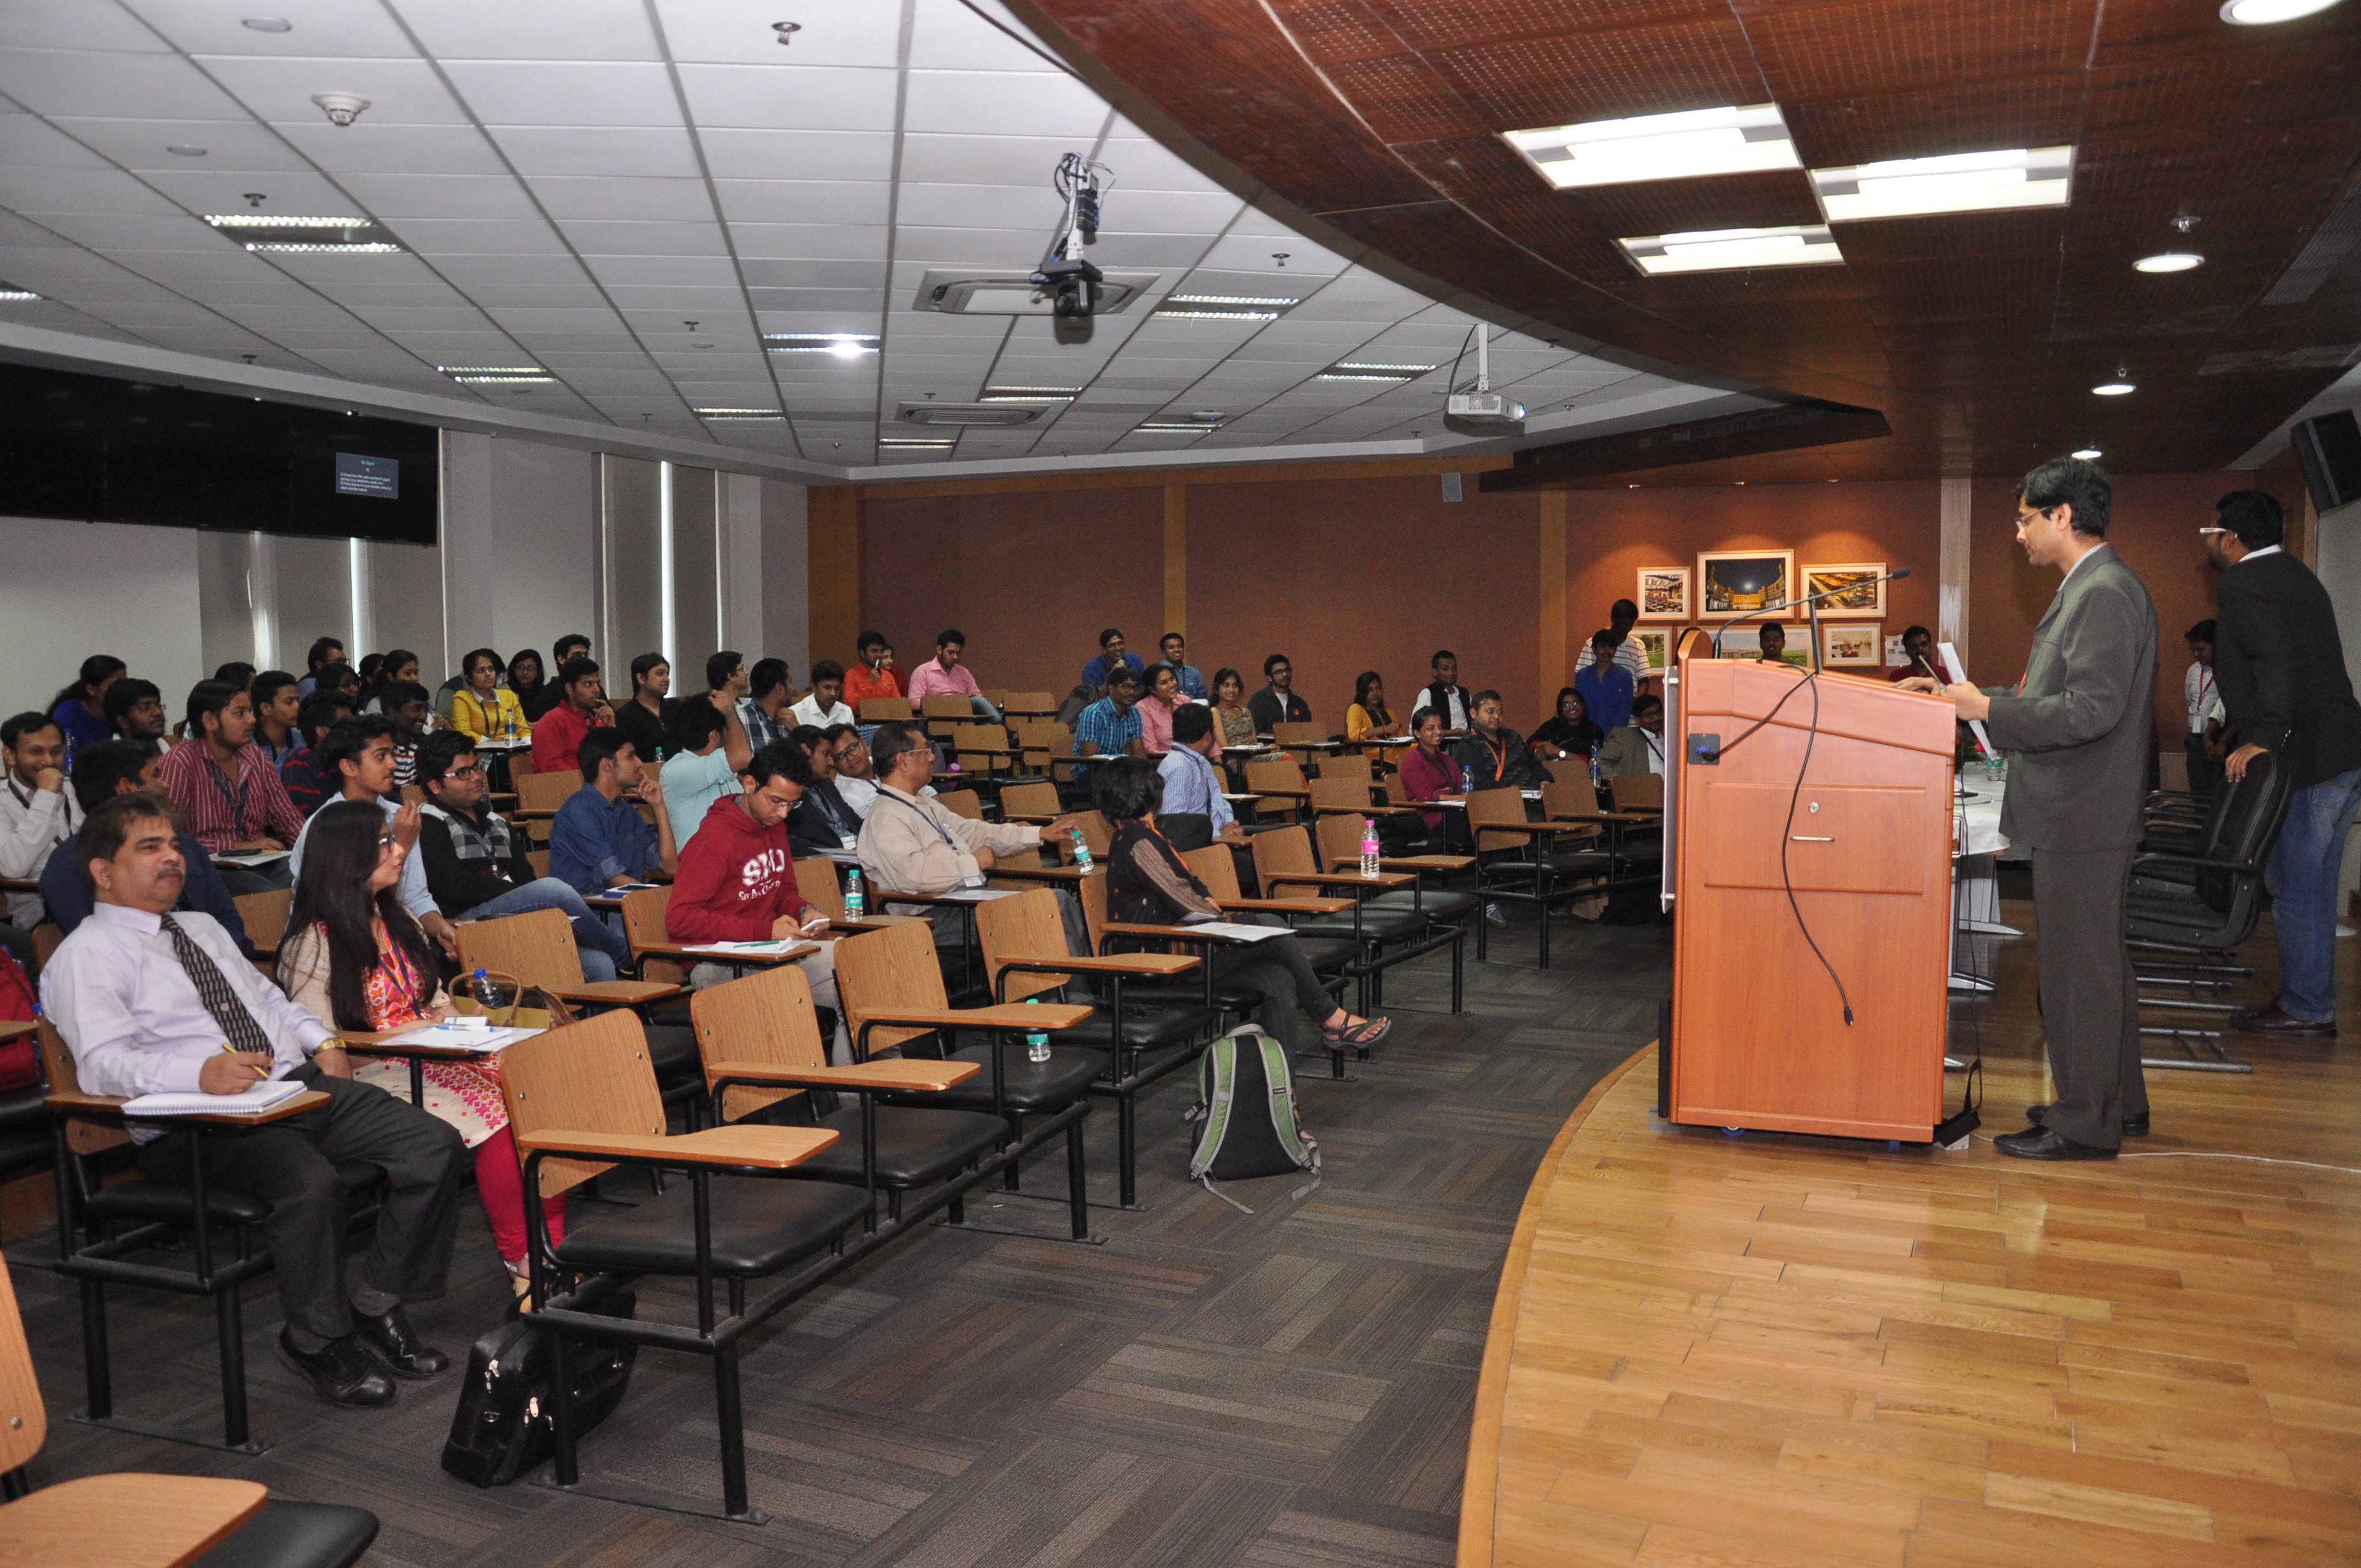 Thinking Social Seminar – Greater Noida